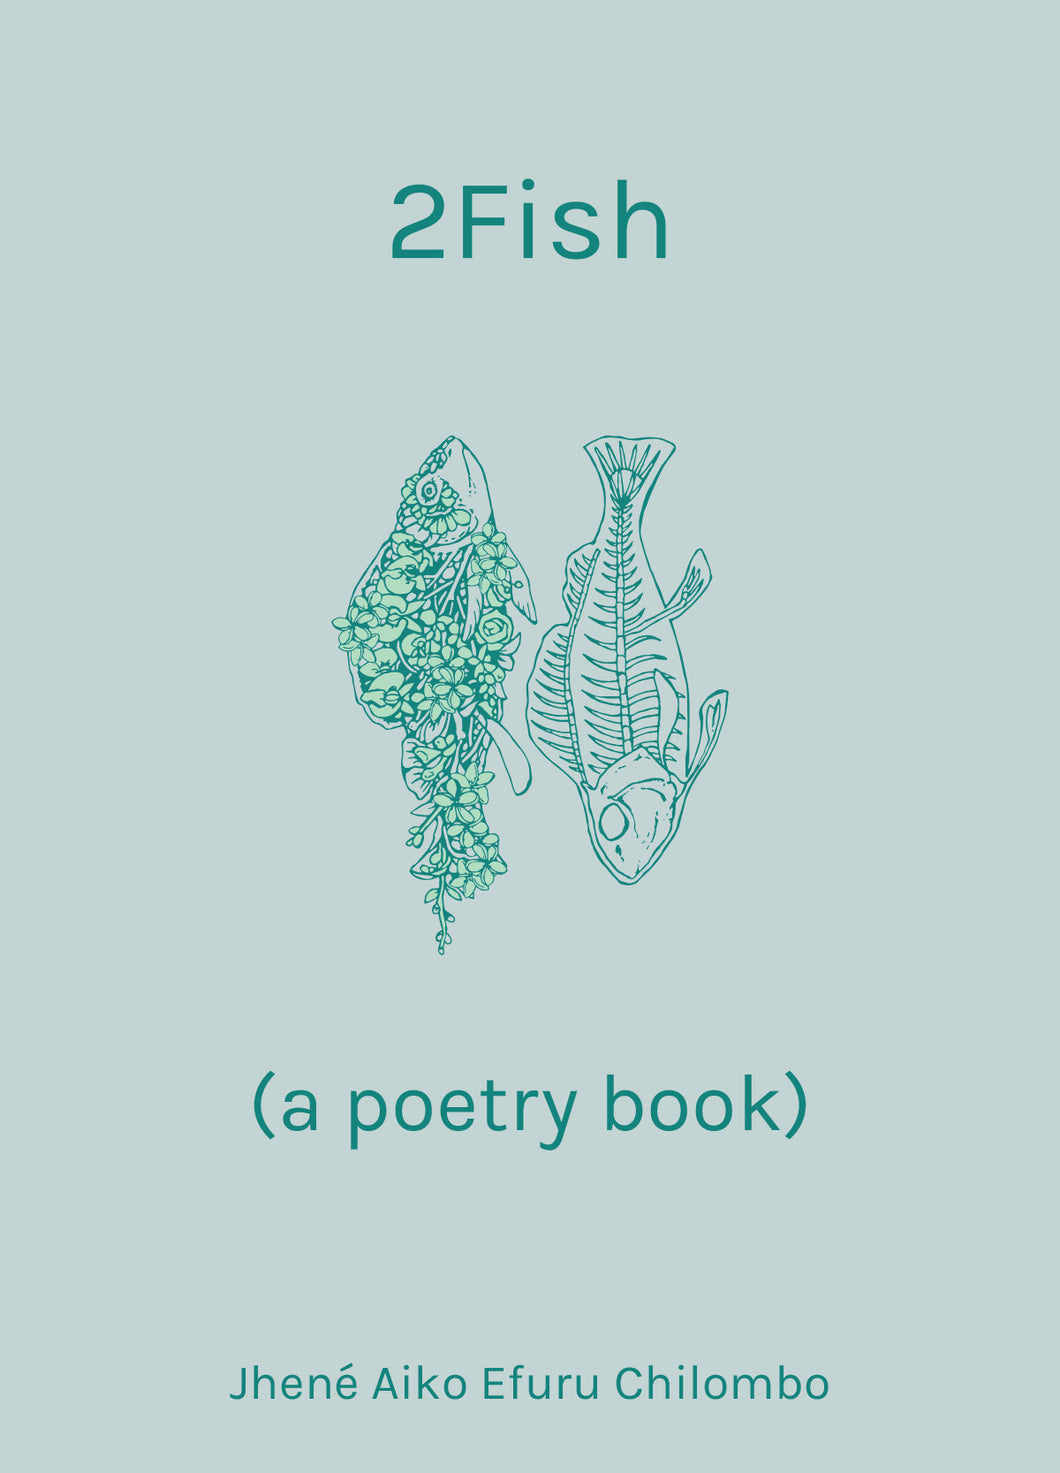 2Fish by Jhené Aiko Efuru Chilombo